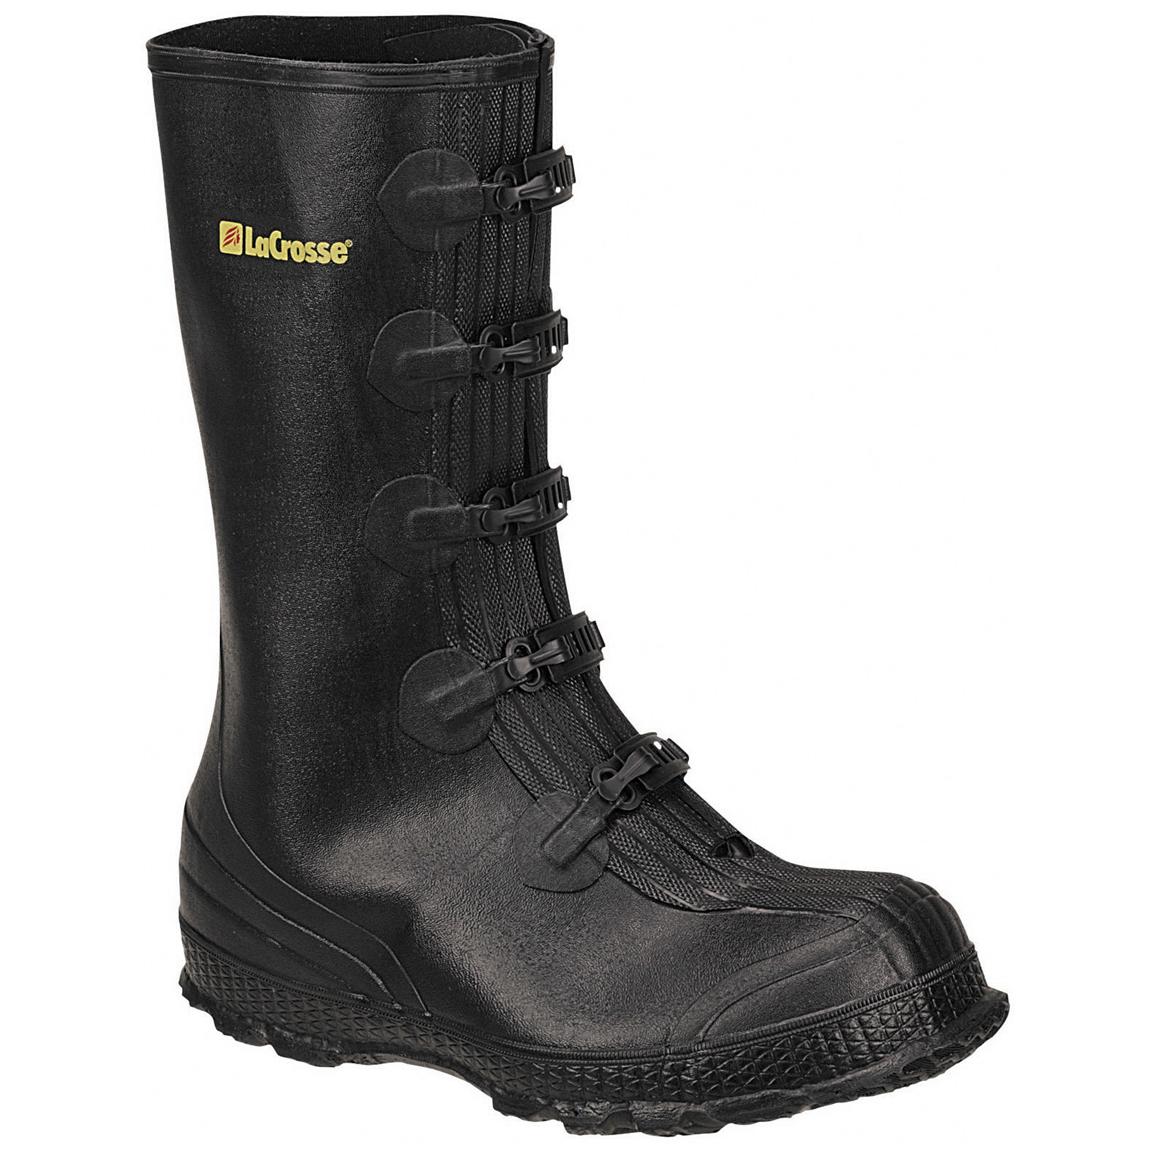 Men's LaCrosse® 14 inch Z-Series Overshoe Work Boots, Black